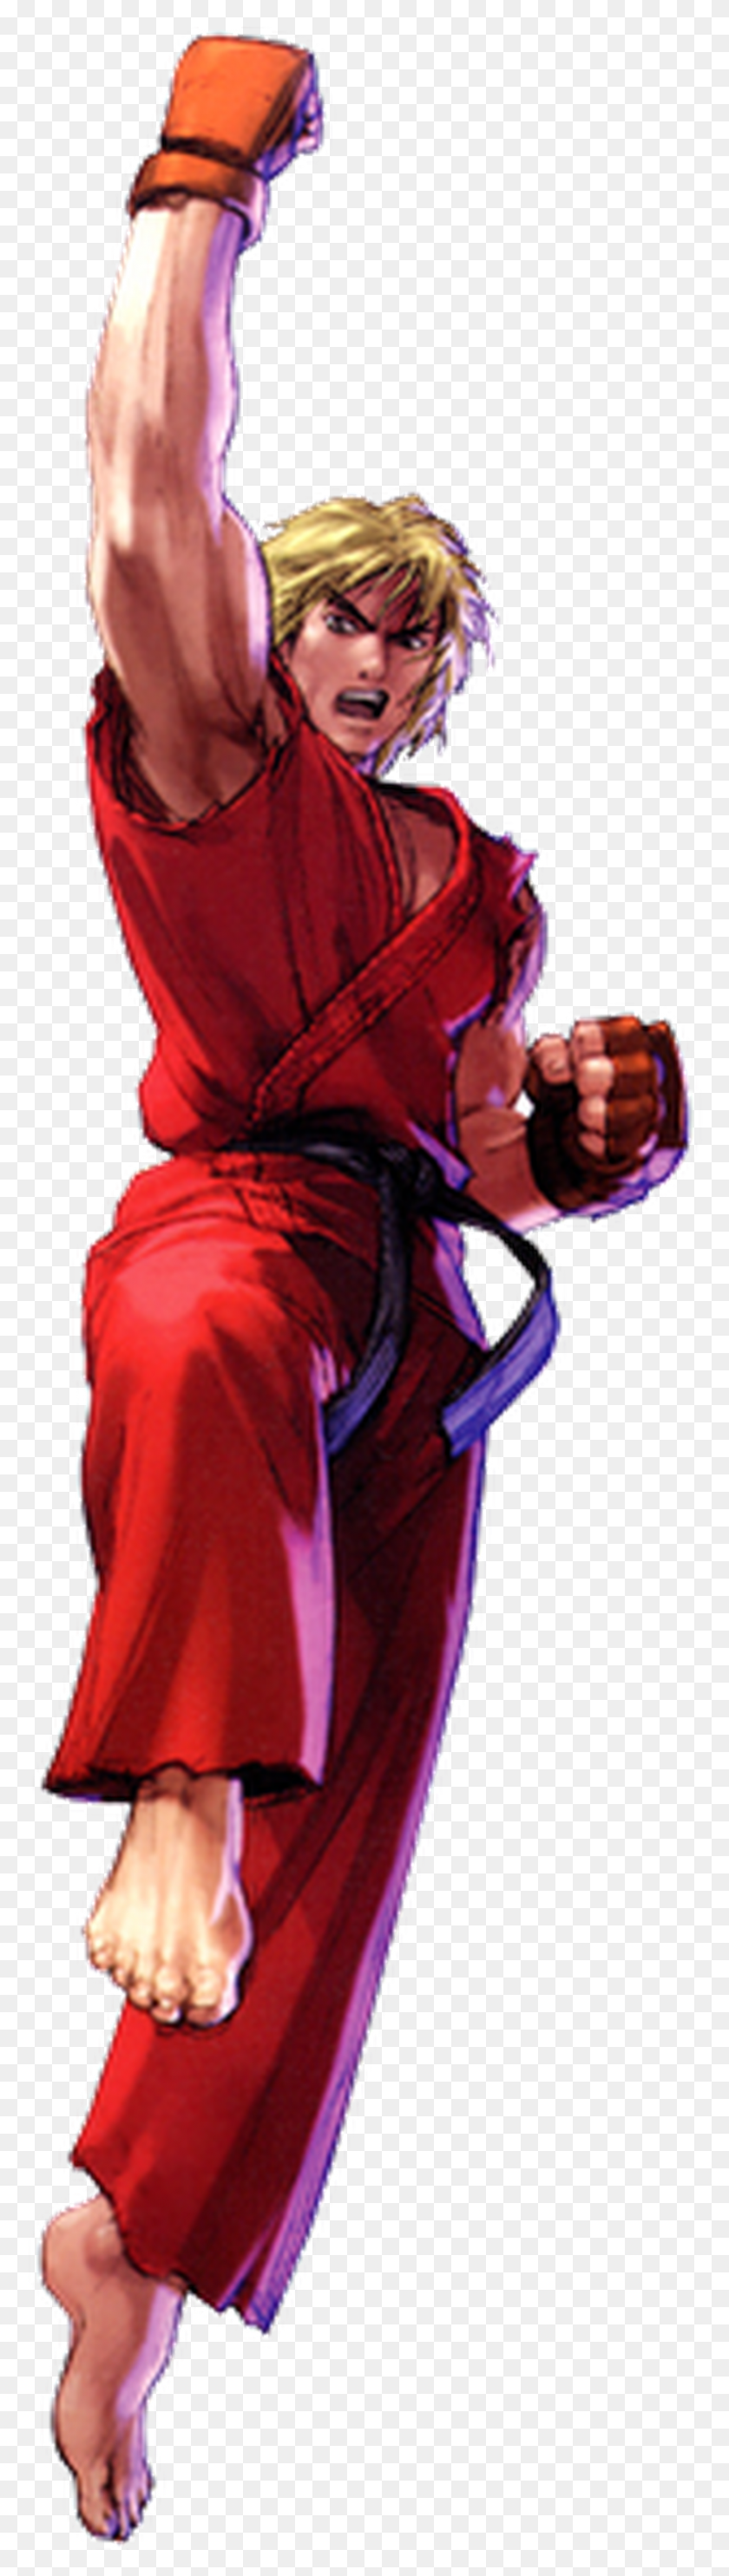 859x3205 Ken Masters Street Fighter Wiki Fandom Powered By Wikia Ken Street Fighter Апперкот, Одежда, Одежда, Человек Hd Png Скачать